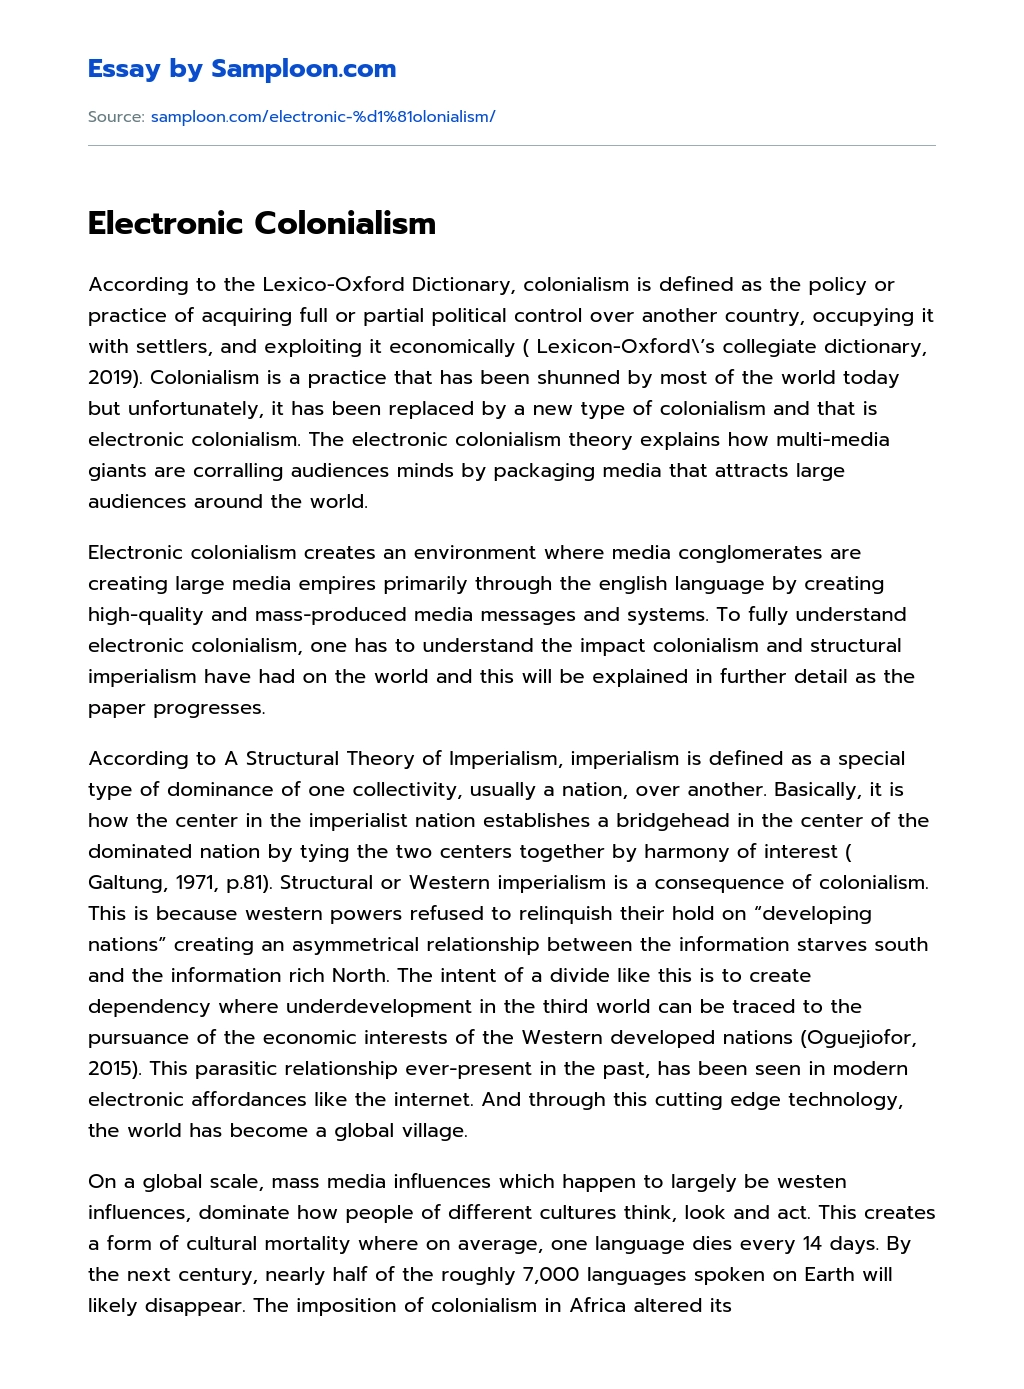 Electronic Сolonialism essay